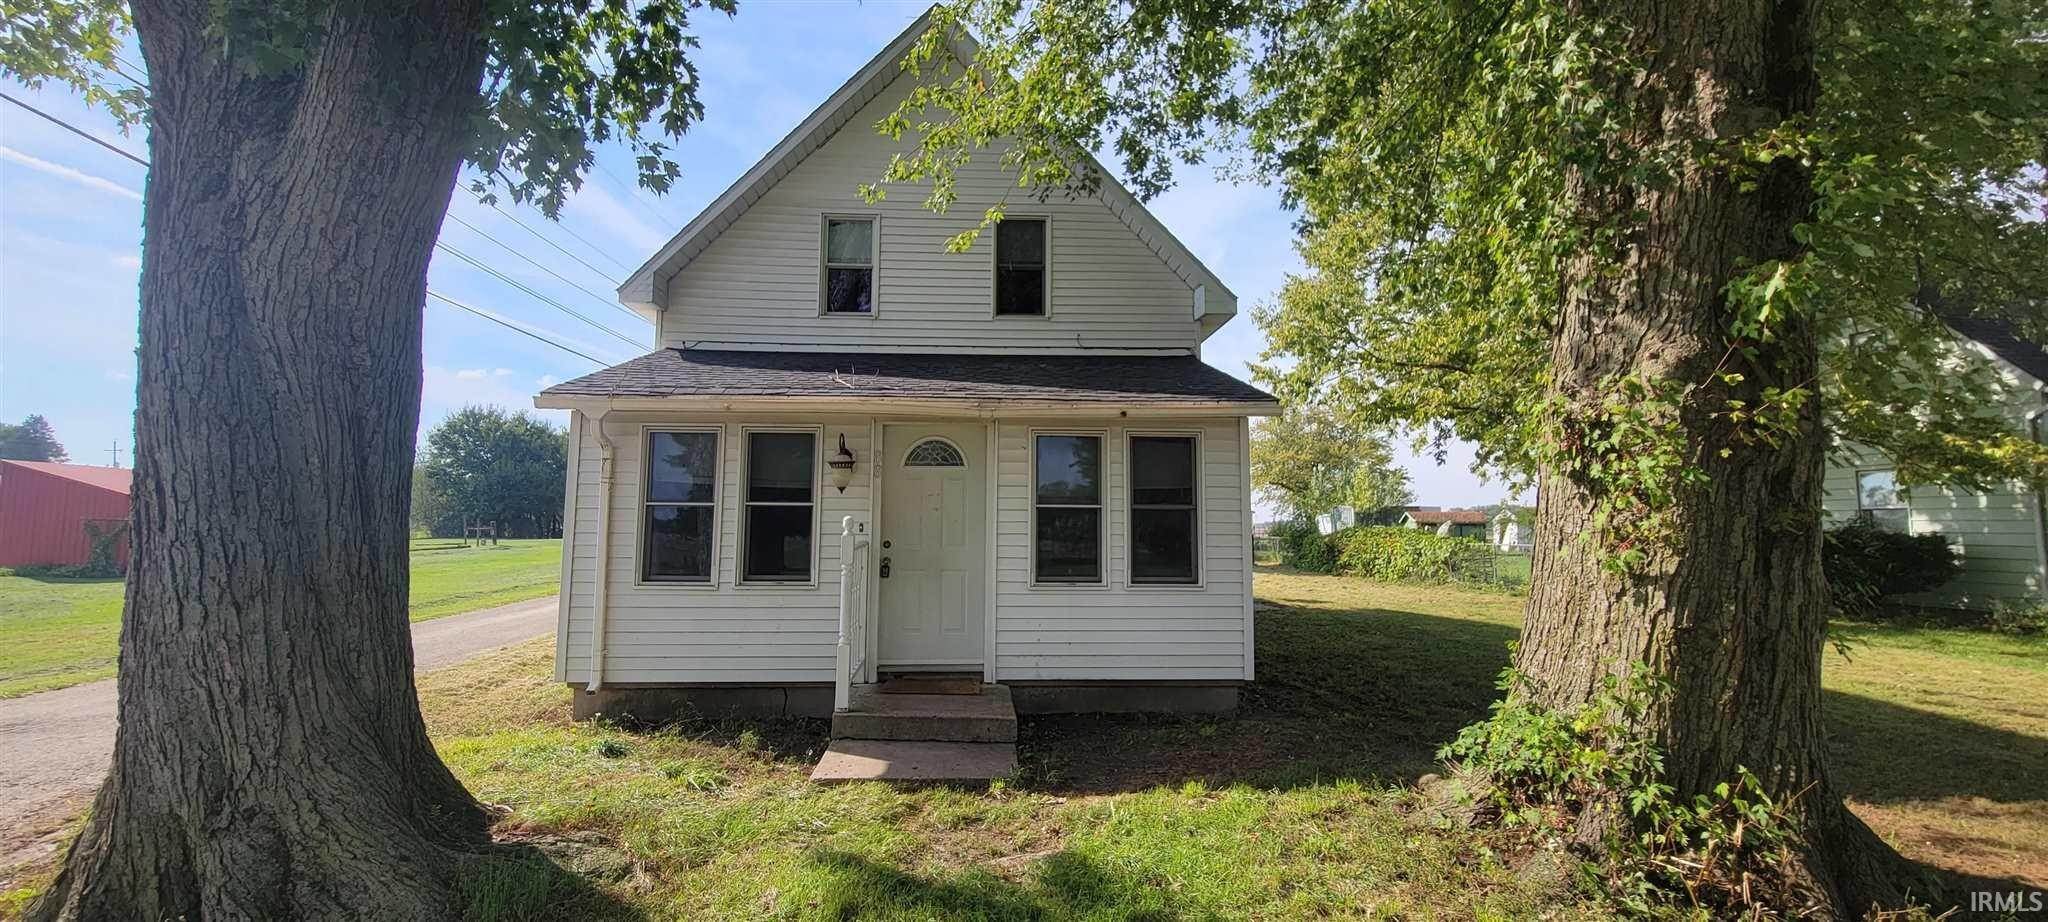 Single Family Homes для того Продажа на 88 Scott Street Rochester, Индиана 46975 Соединенные Штаты